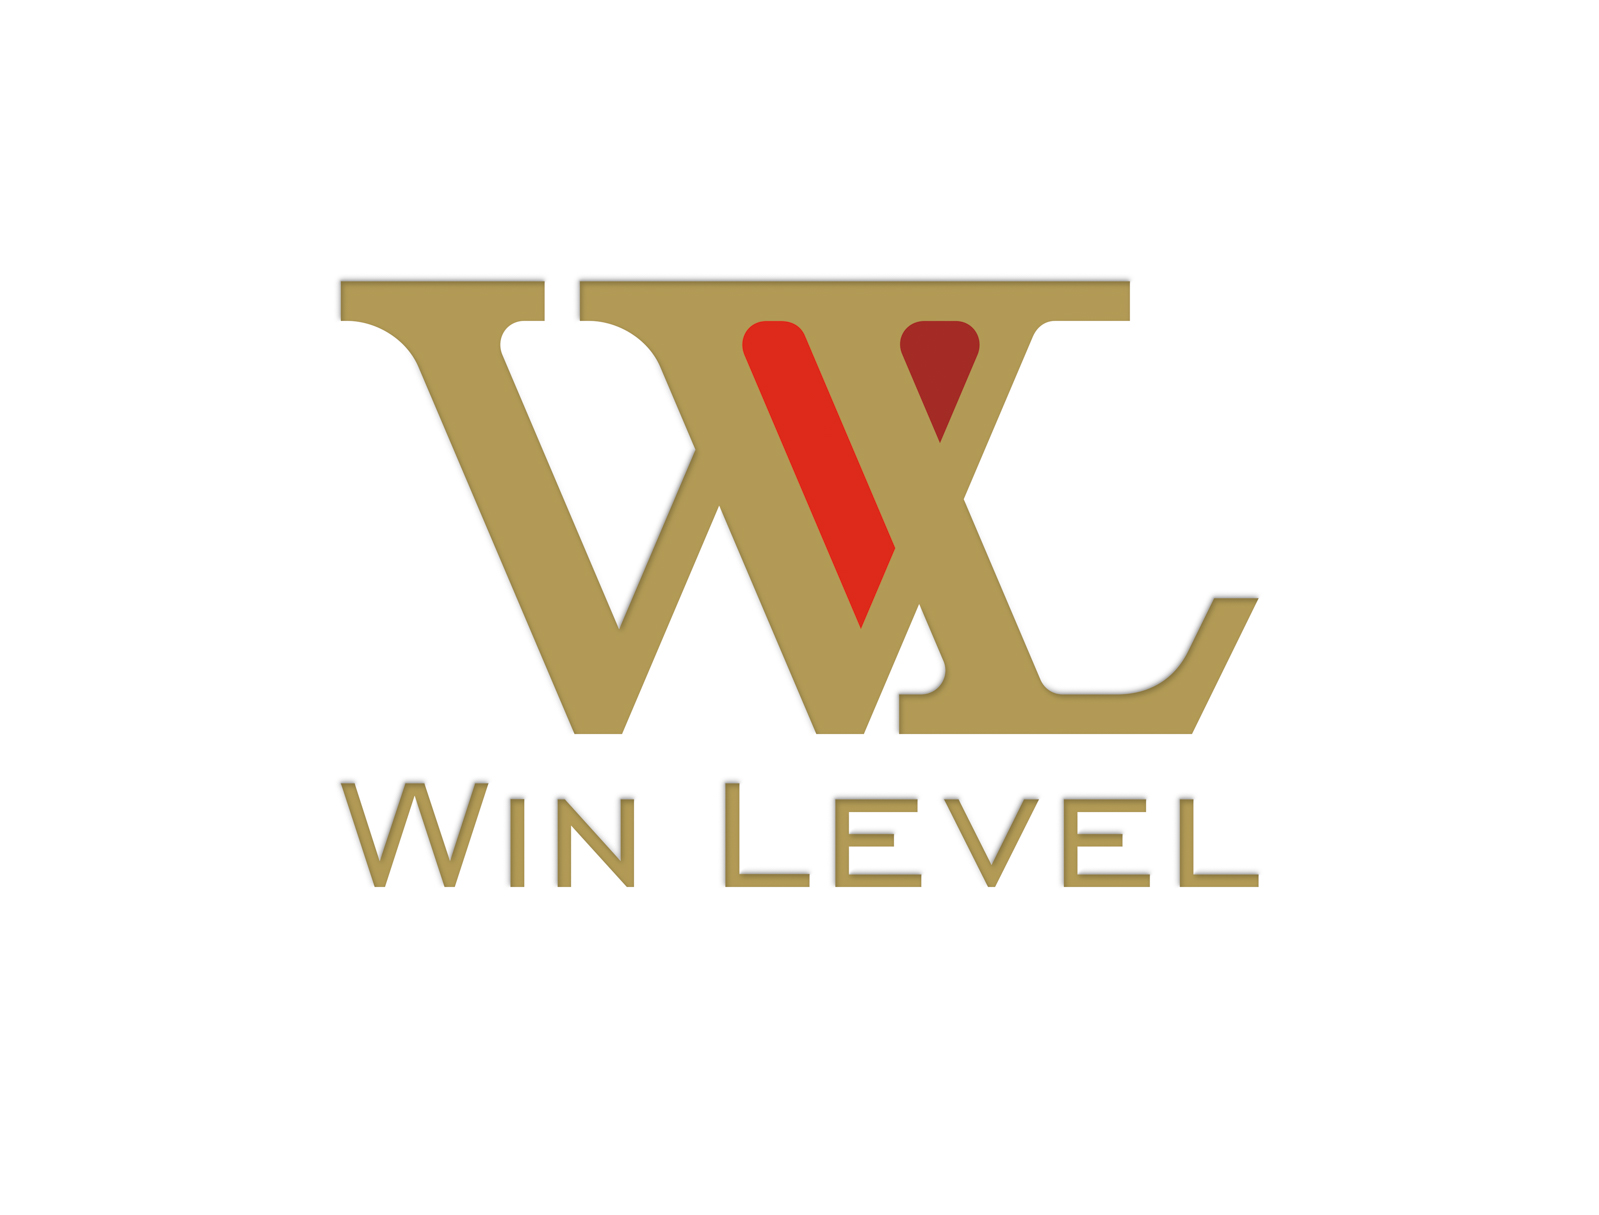 Win level. Winlevel логотип. От а до я логотип. Футурамия логотип.